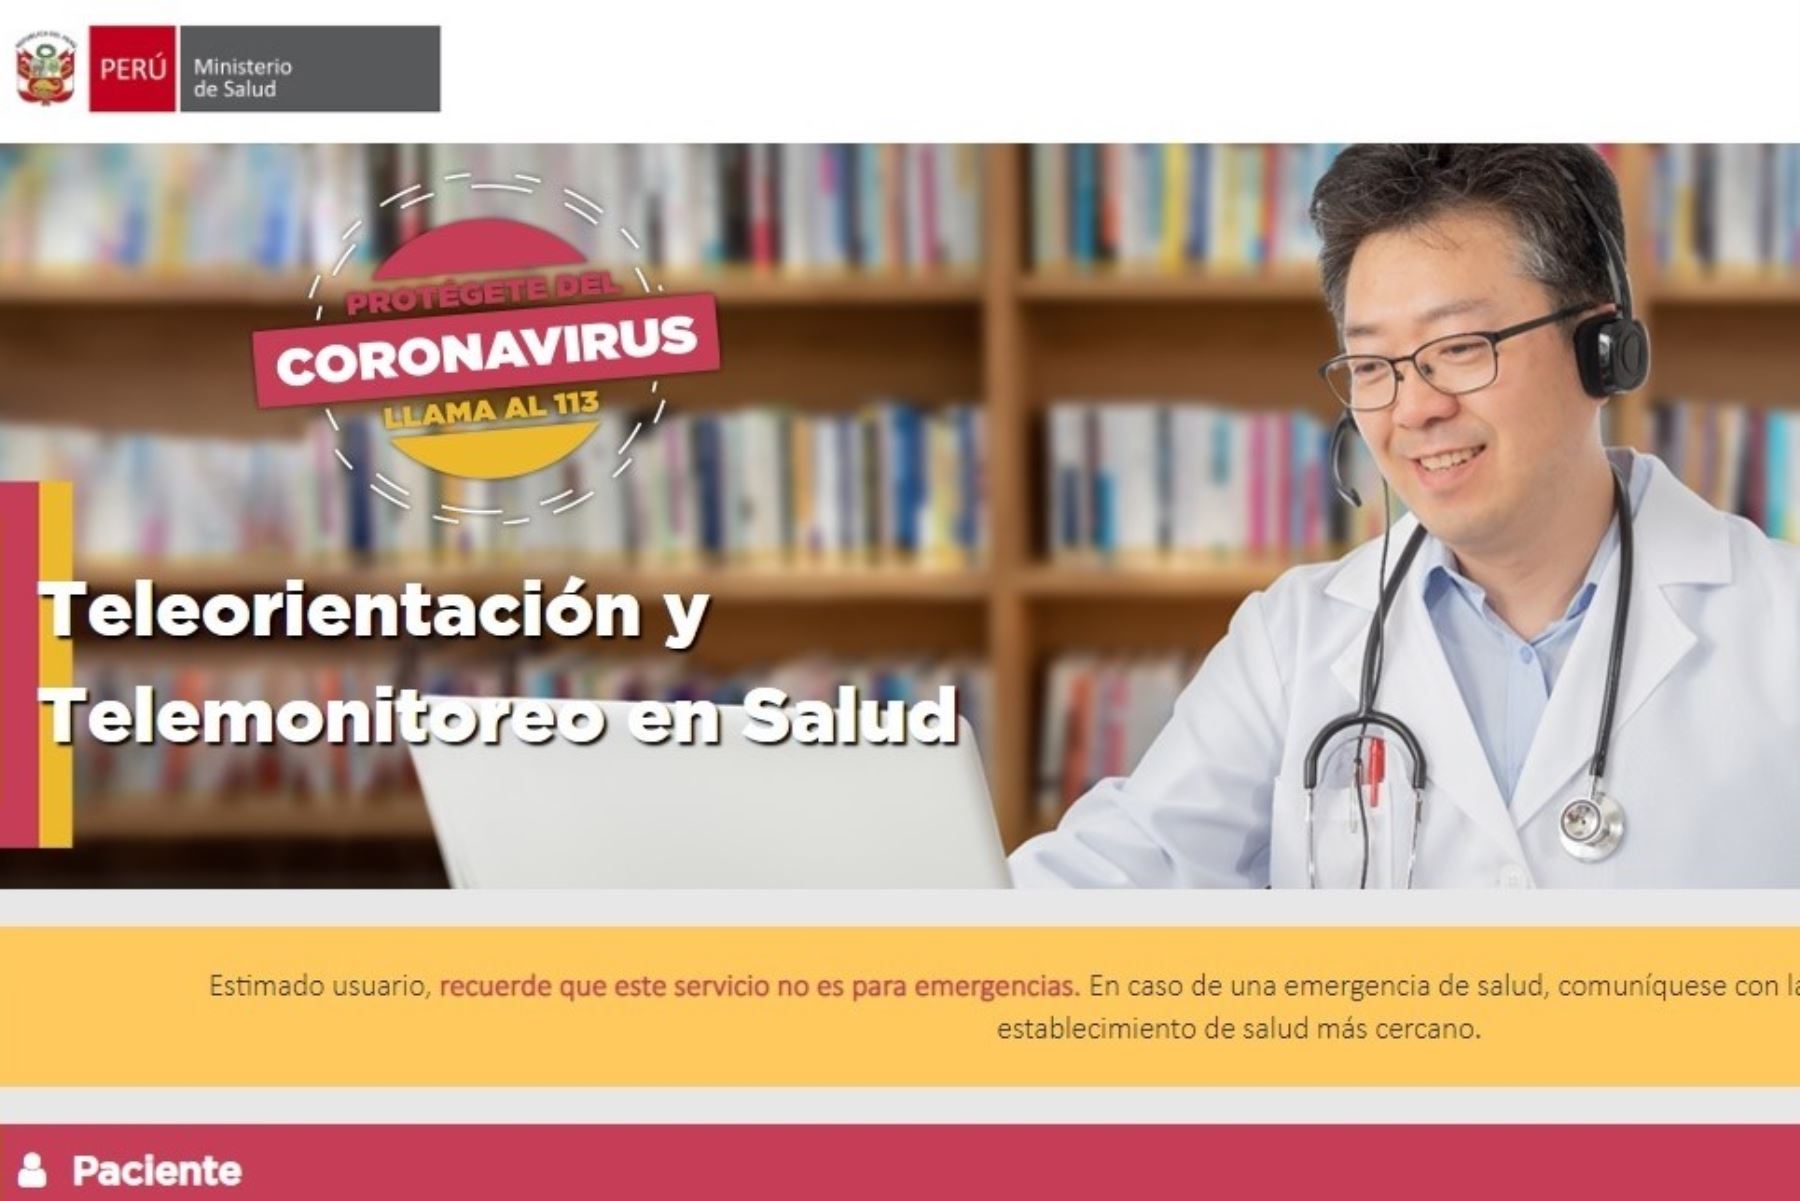 Portal Teleatiendo del Ministerio de Salud.